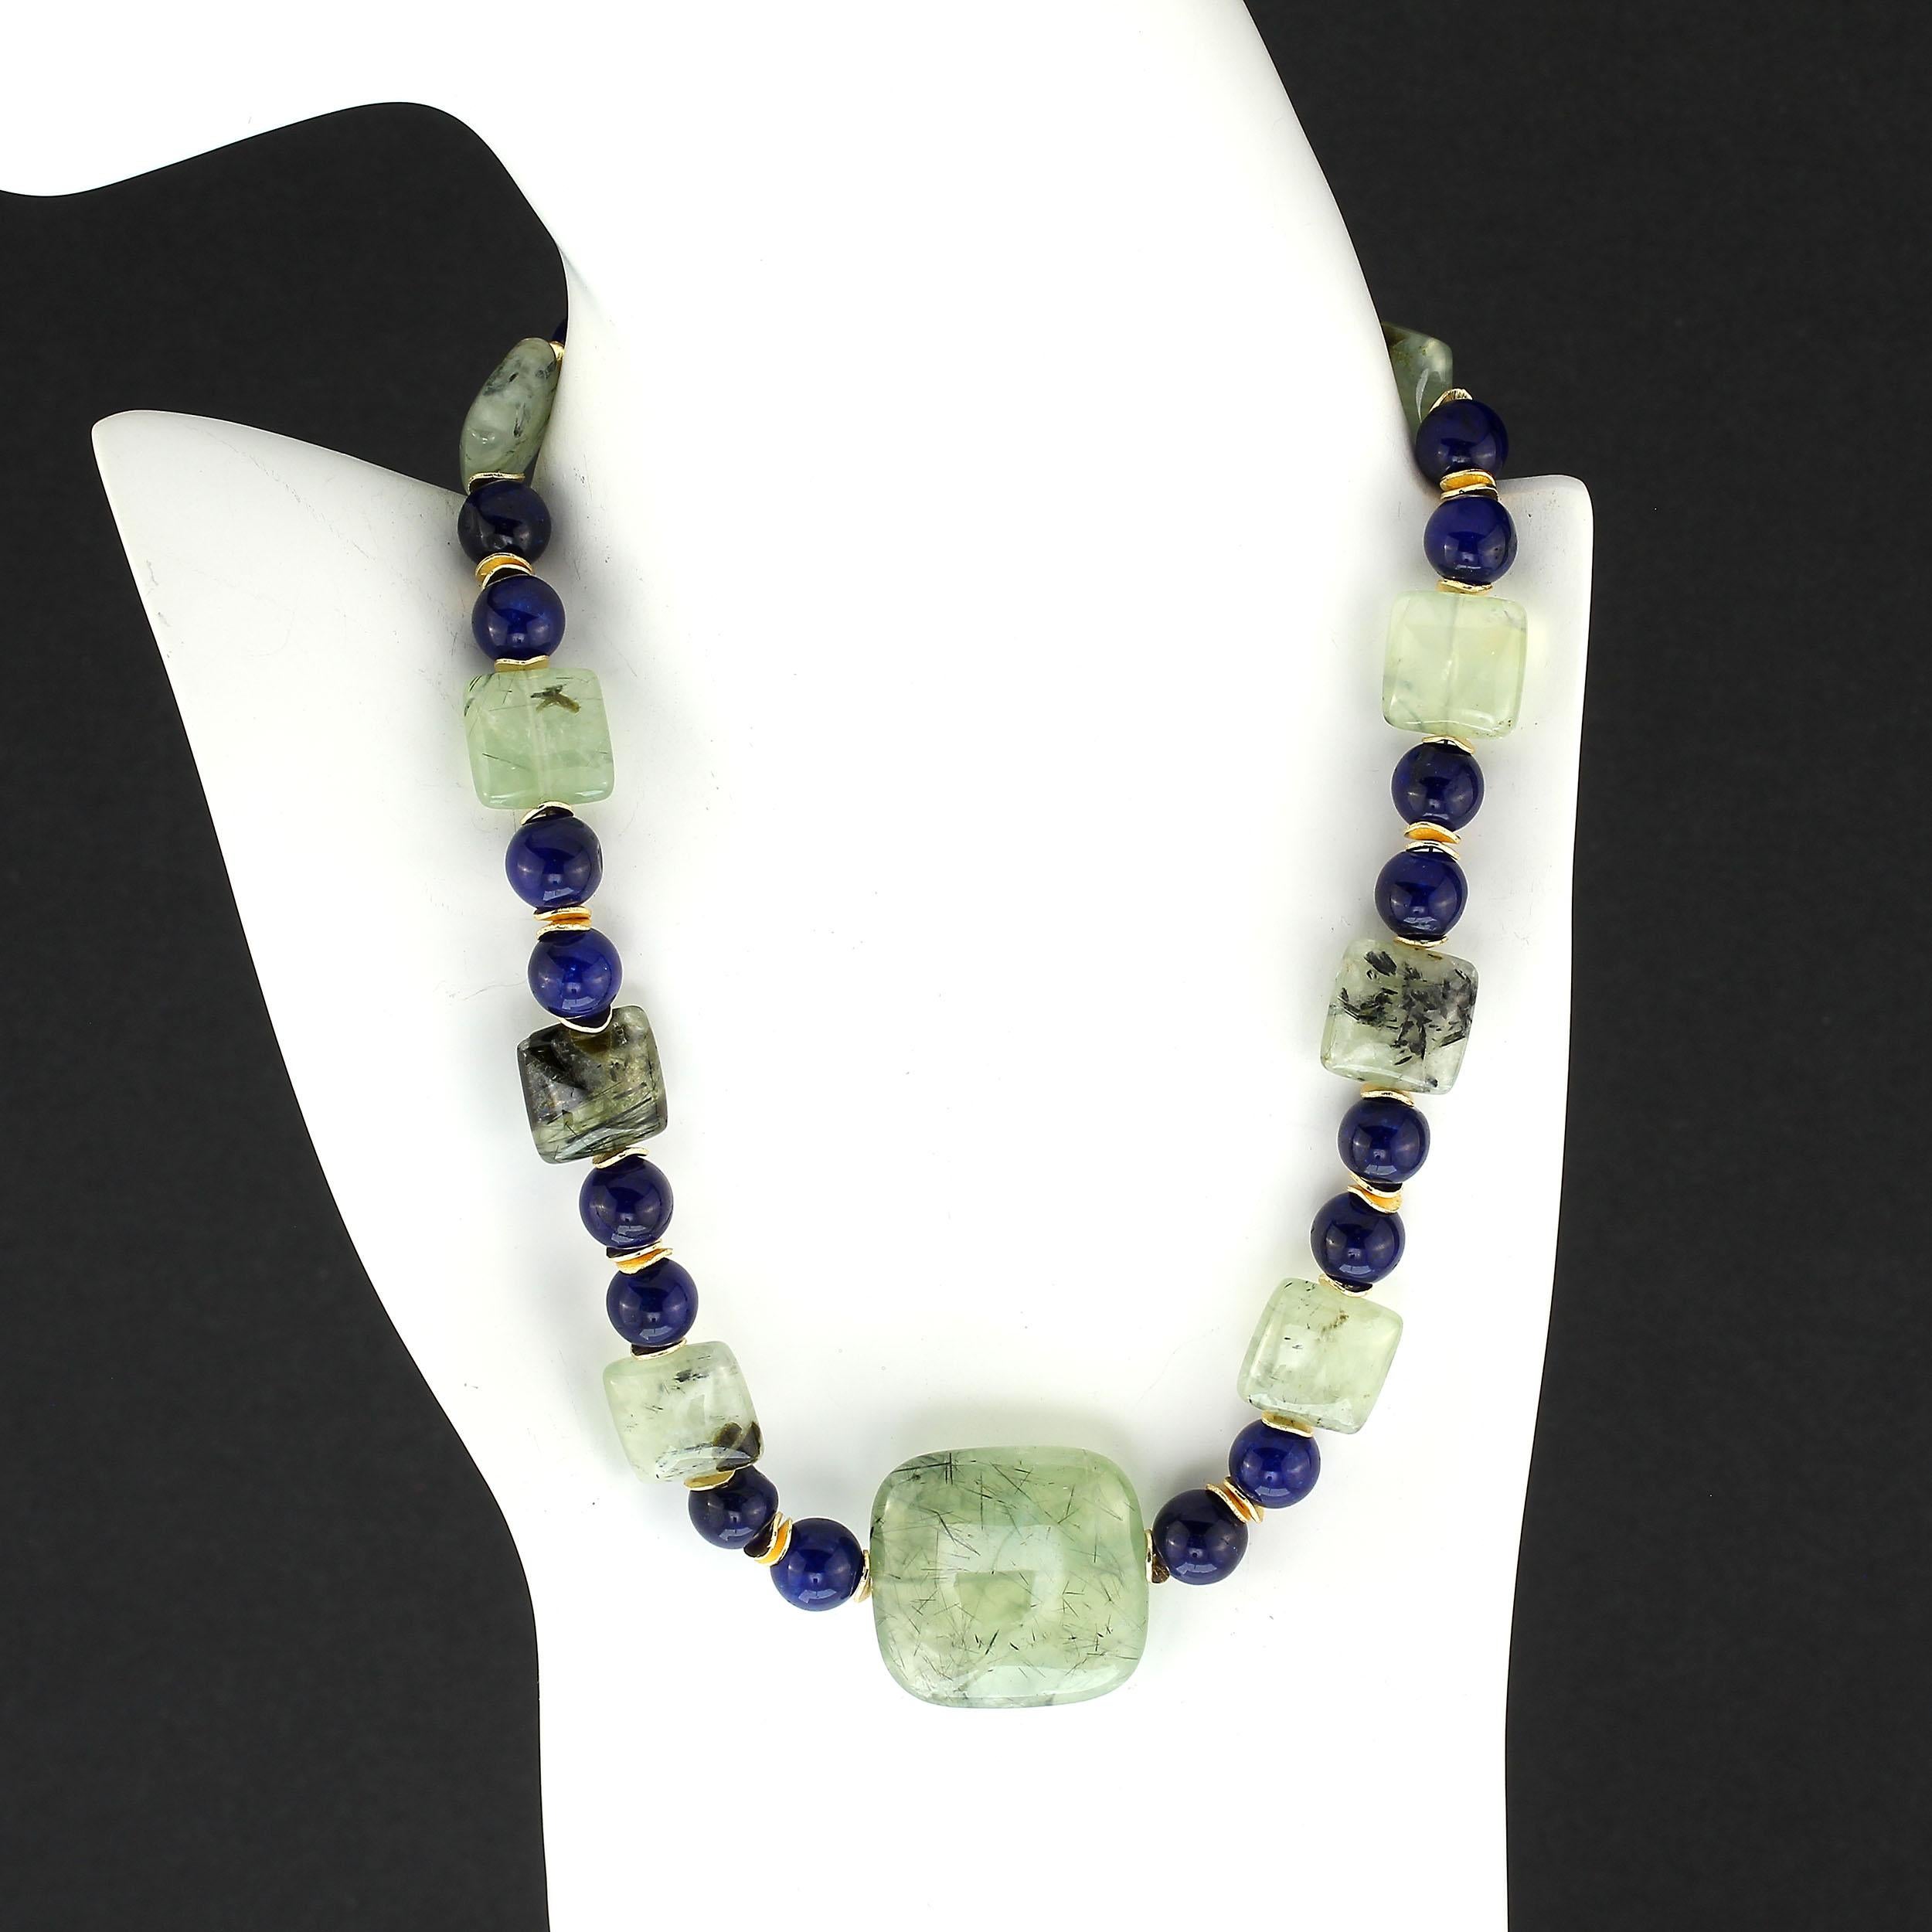 Artist AJD Elegant Green Prehnite and Blue Agate Choker Necklace